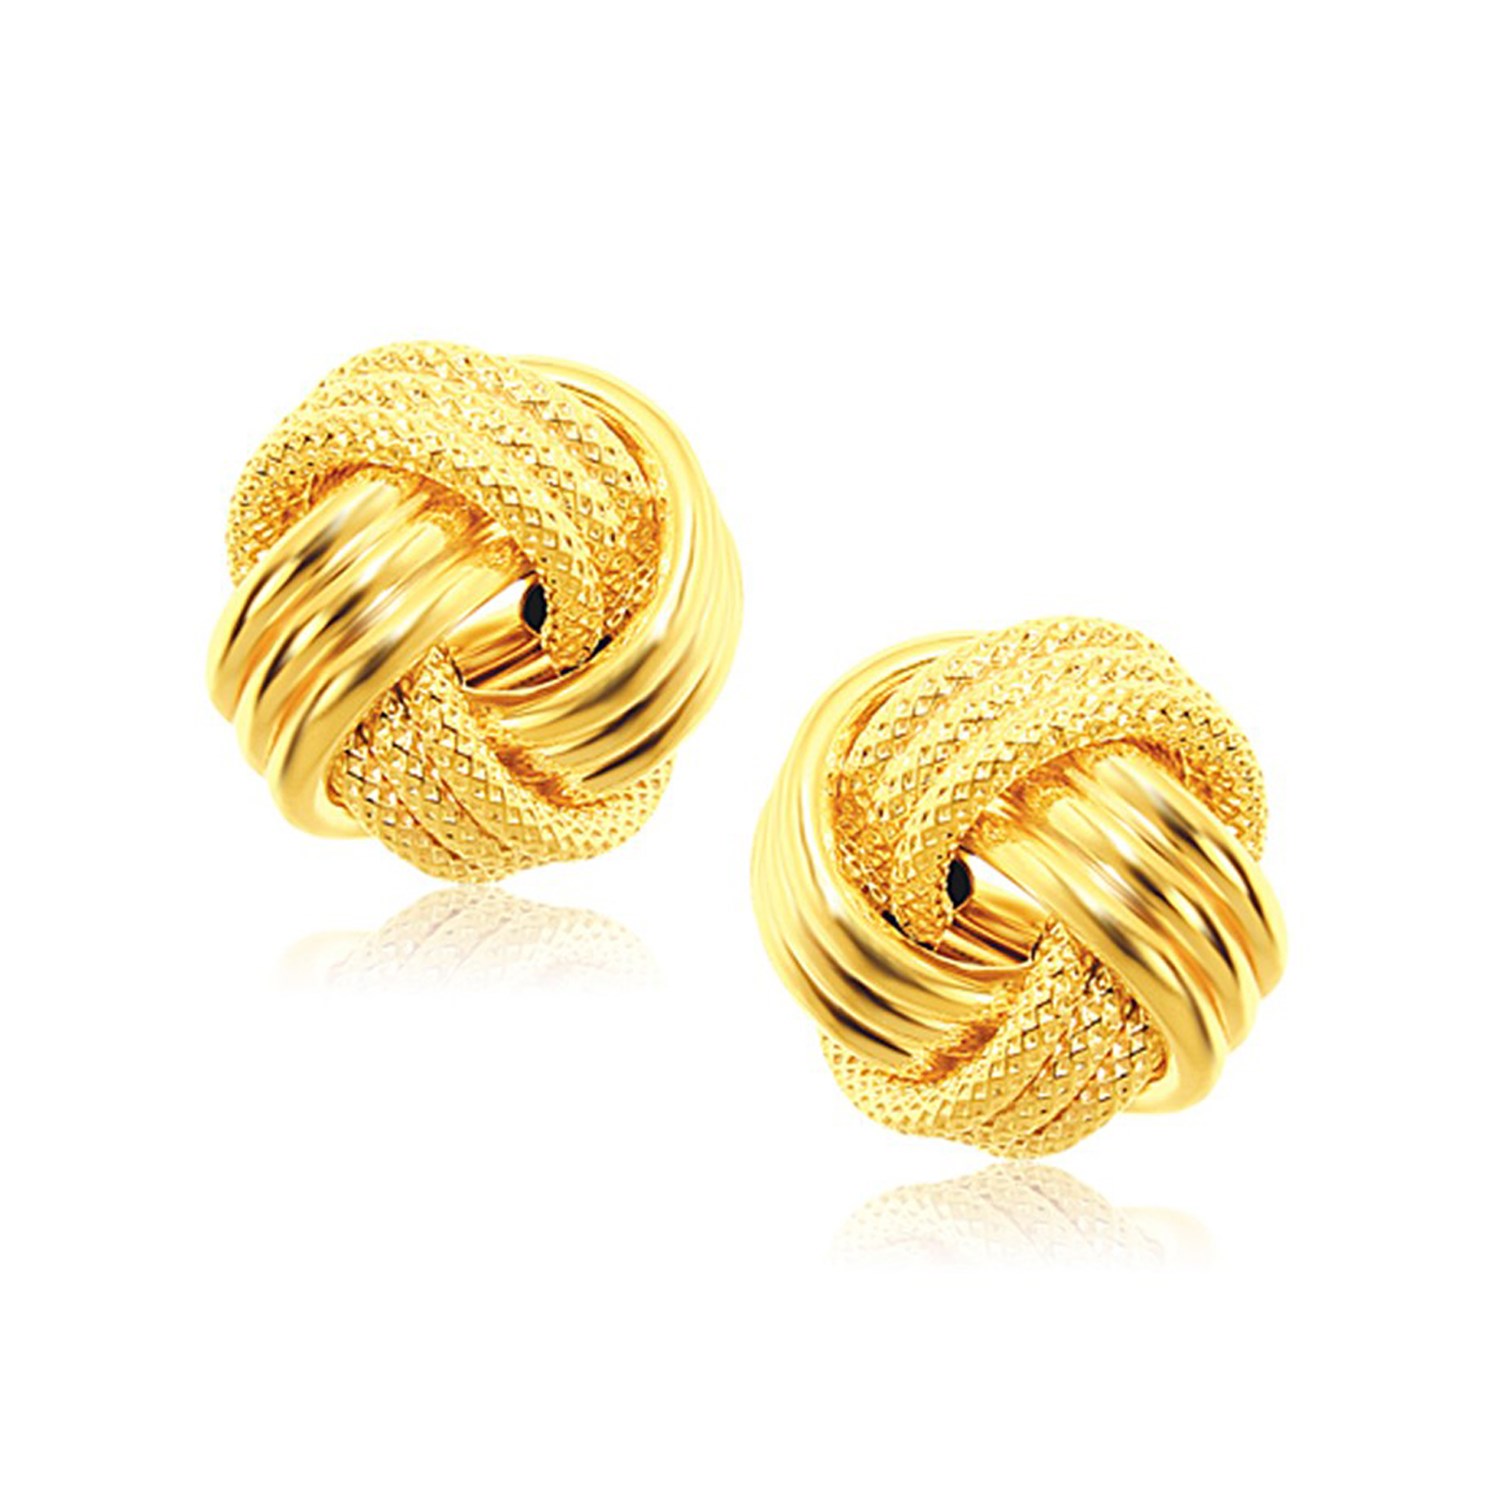 Interweaved Love Knot Stud Earrings in 14k Yellow Gold - Richard Cannon